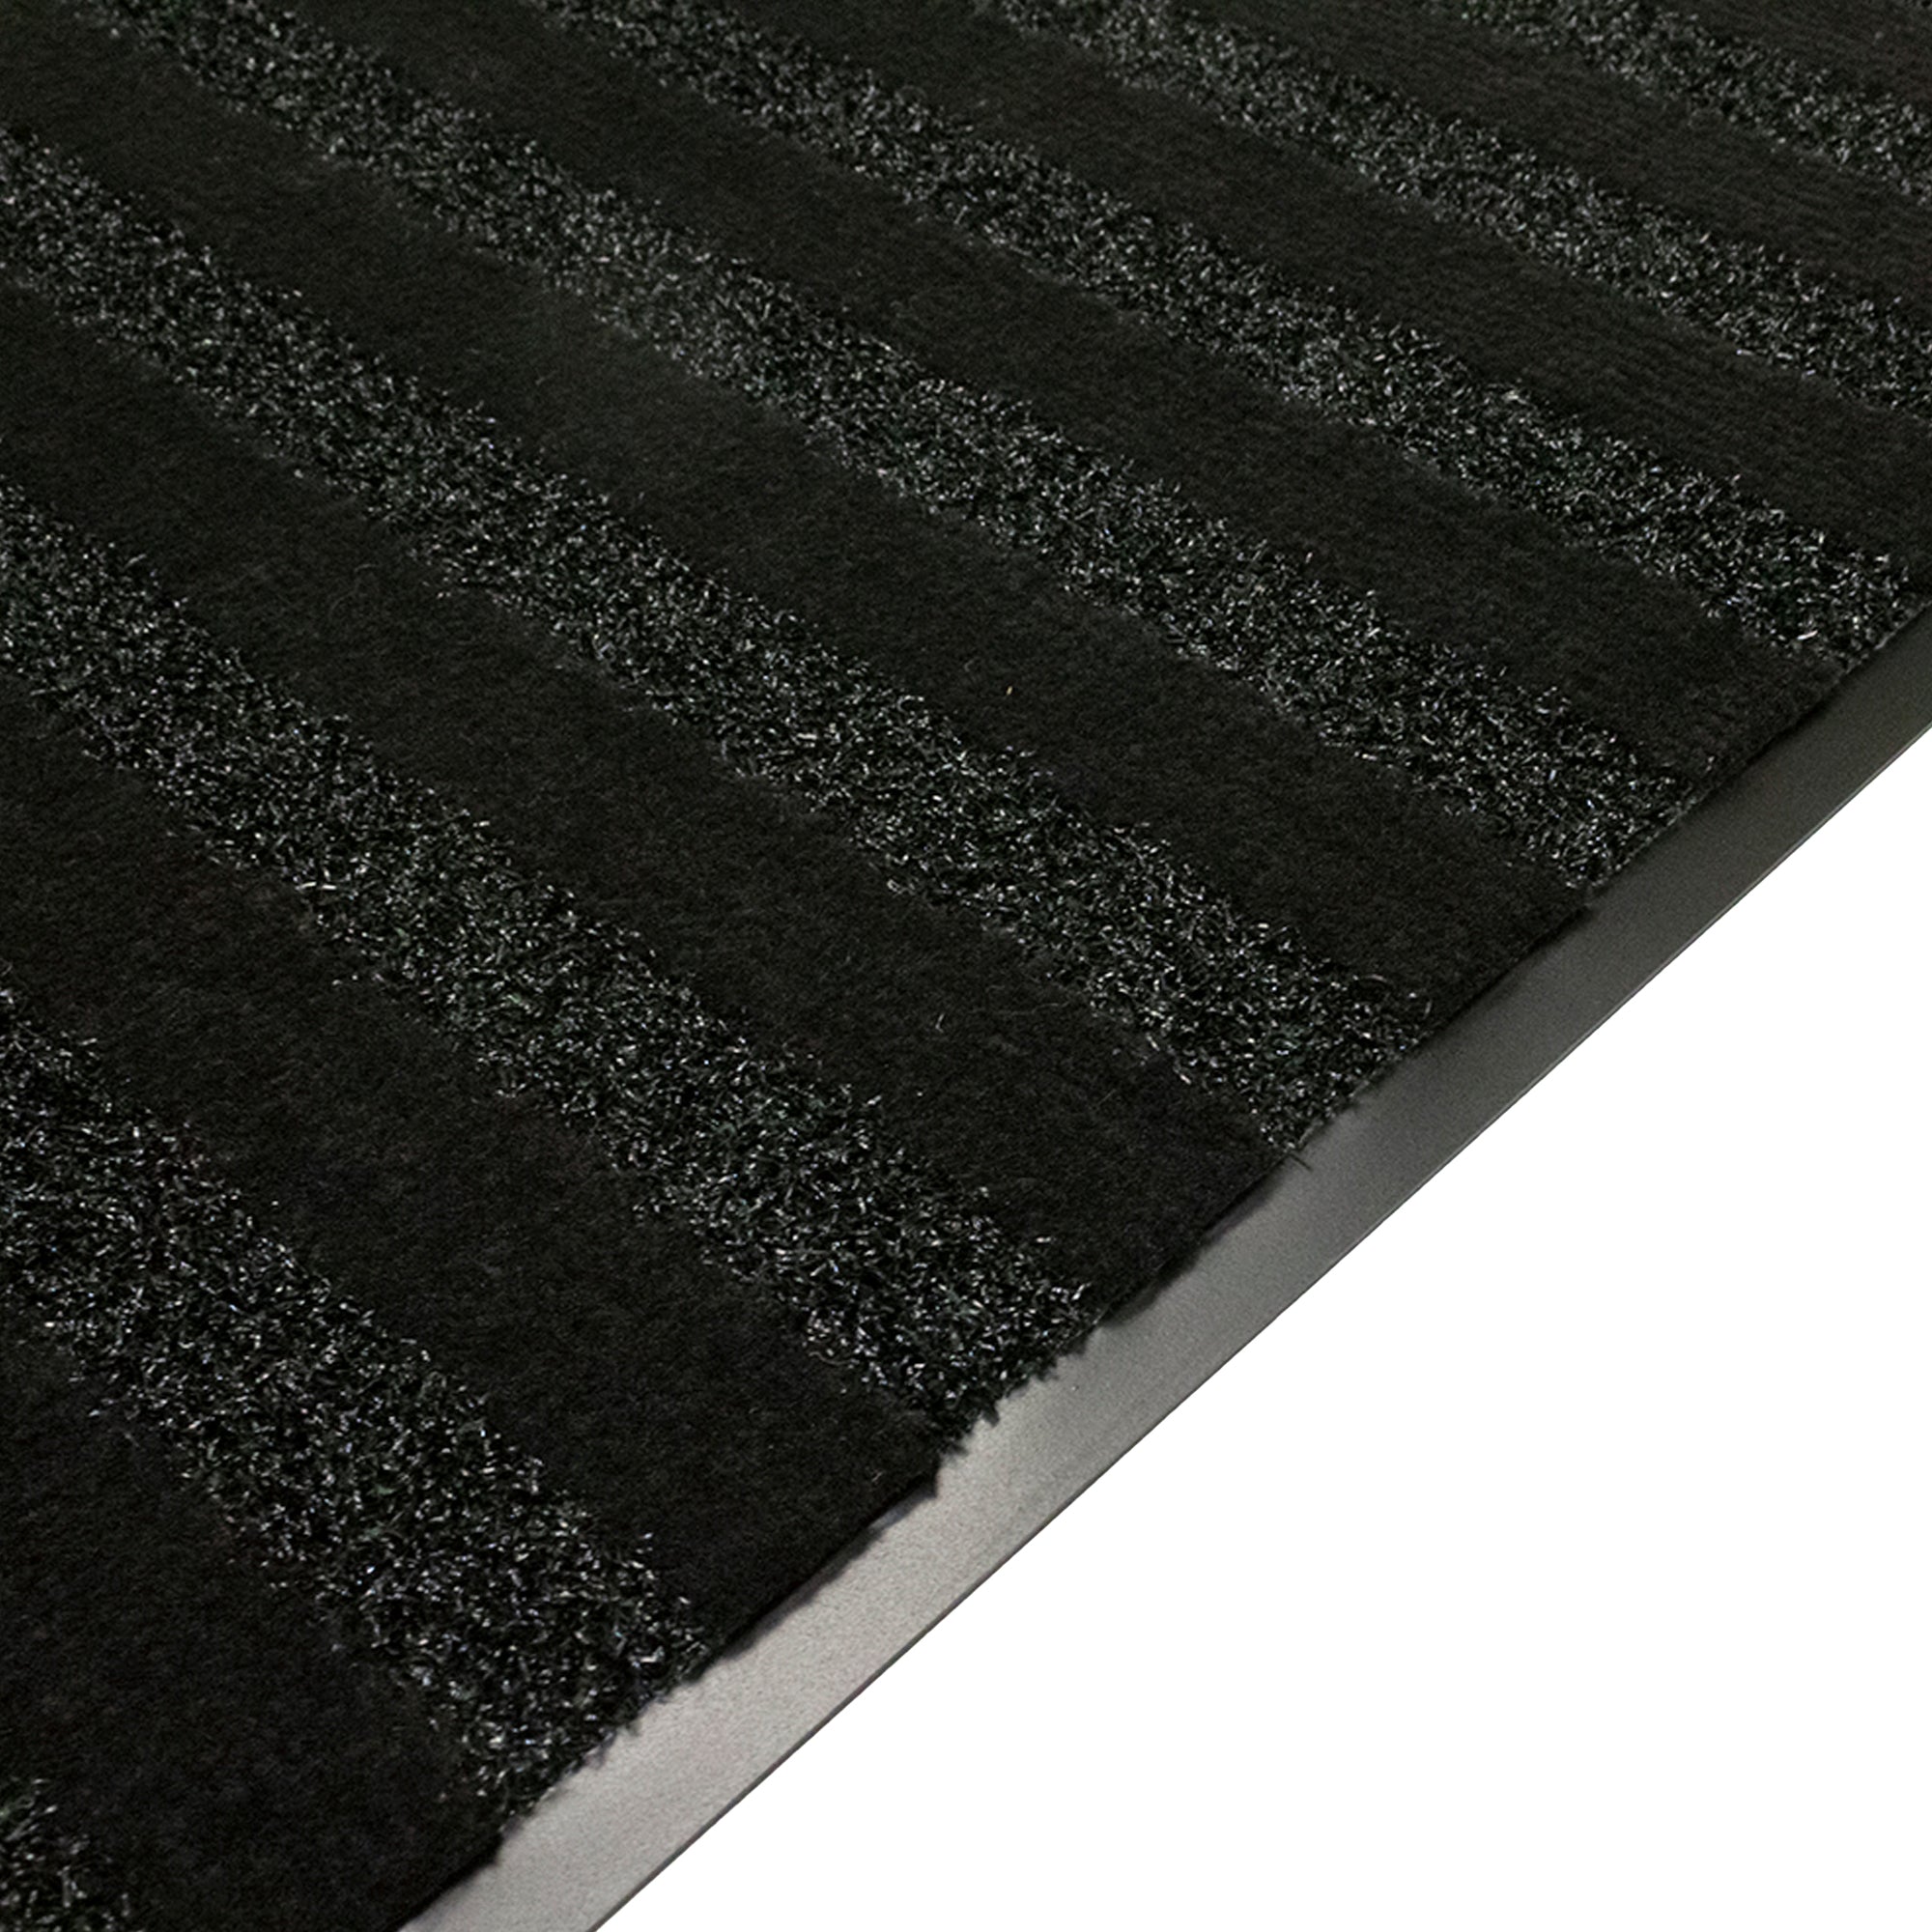 paperflow-tappeto-ingresso-3in1-90x150cm-antracite-grigio